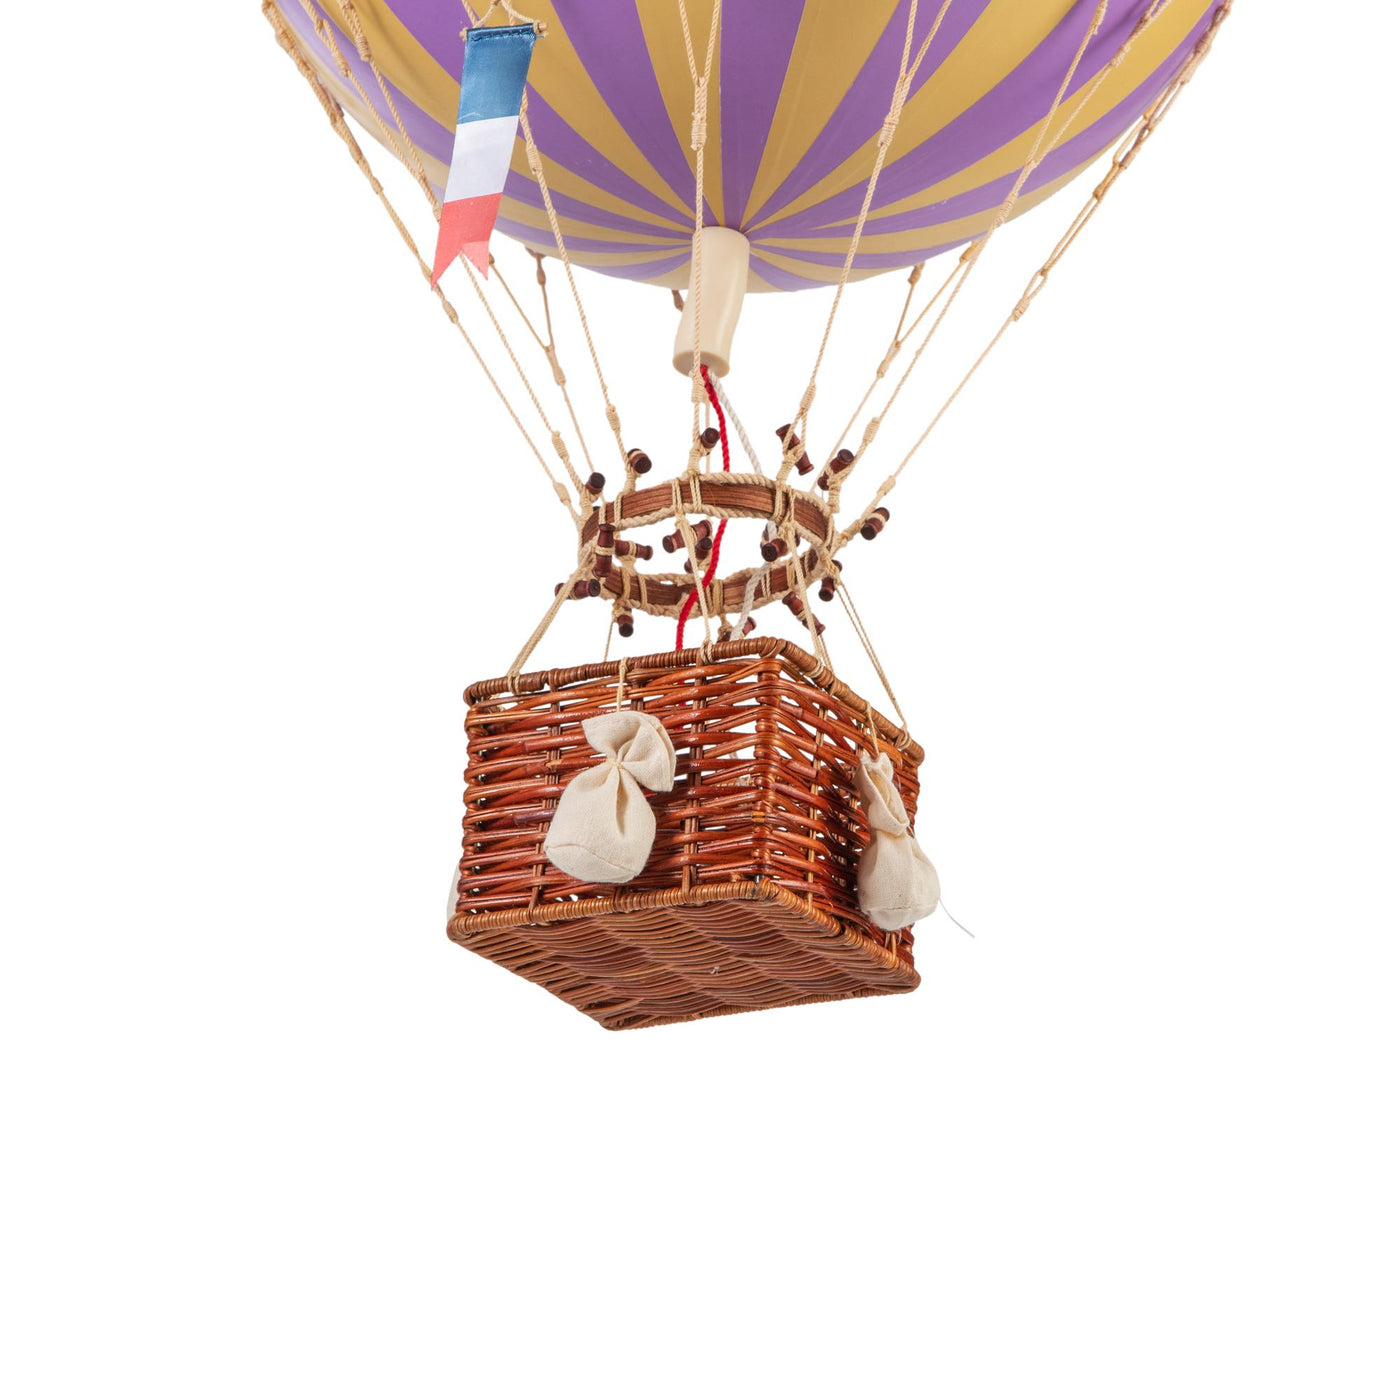 Luftballon Lavender, 32 cm. Royal Aero, Authentic Models